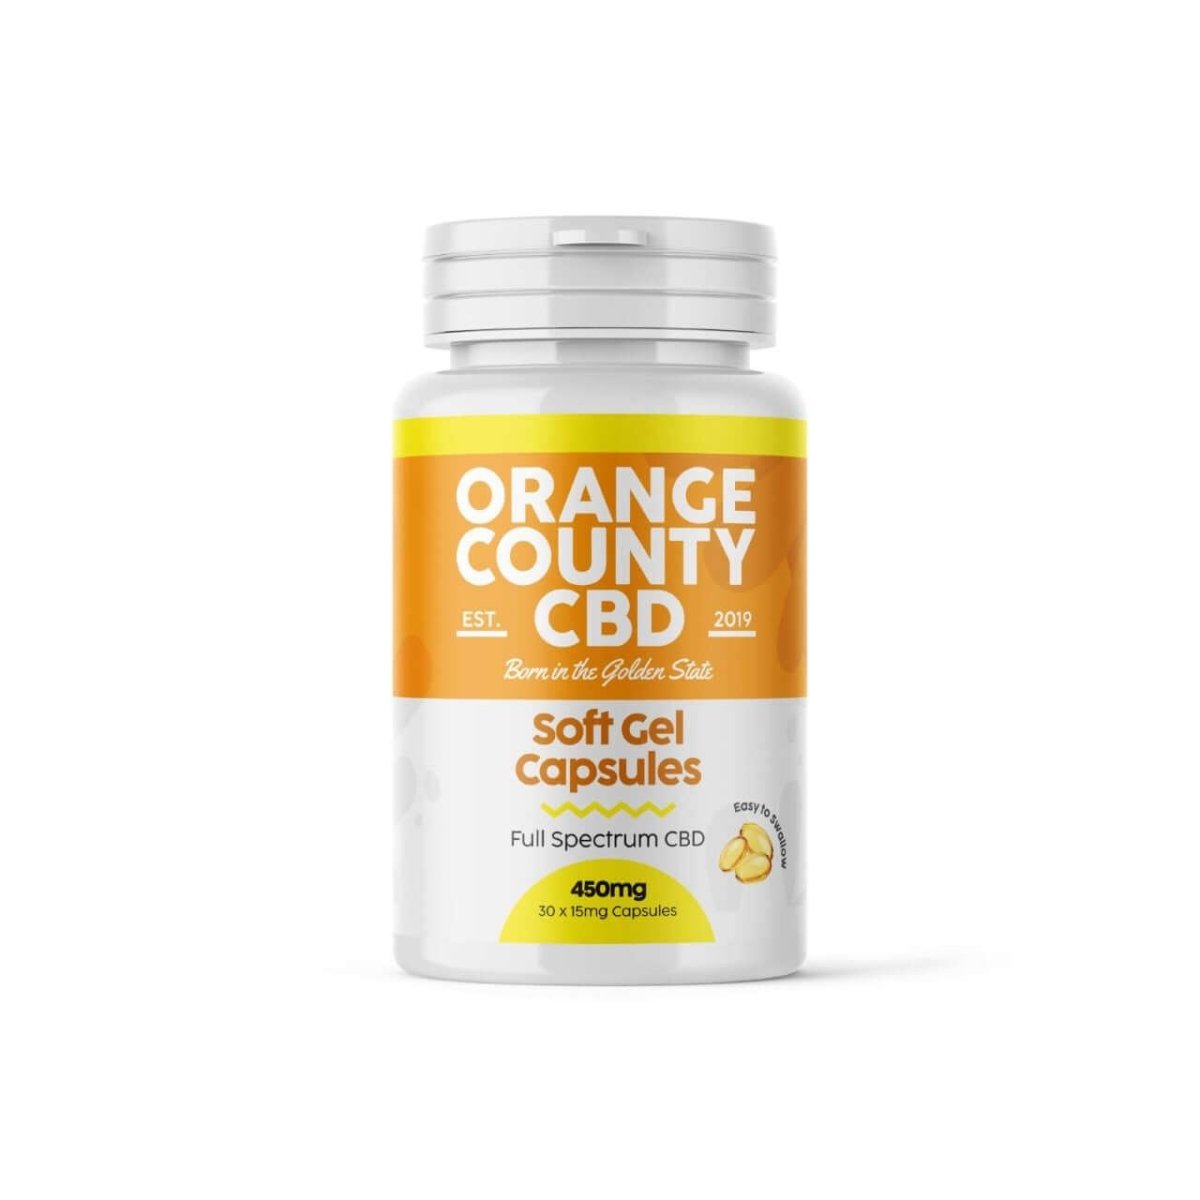 Orange County CBD - Full Spectrum Soft Gel CBD Capsules - 15mg per capsule - Mowbray CBD